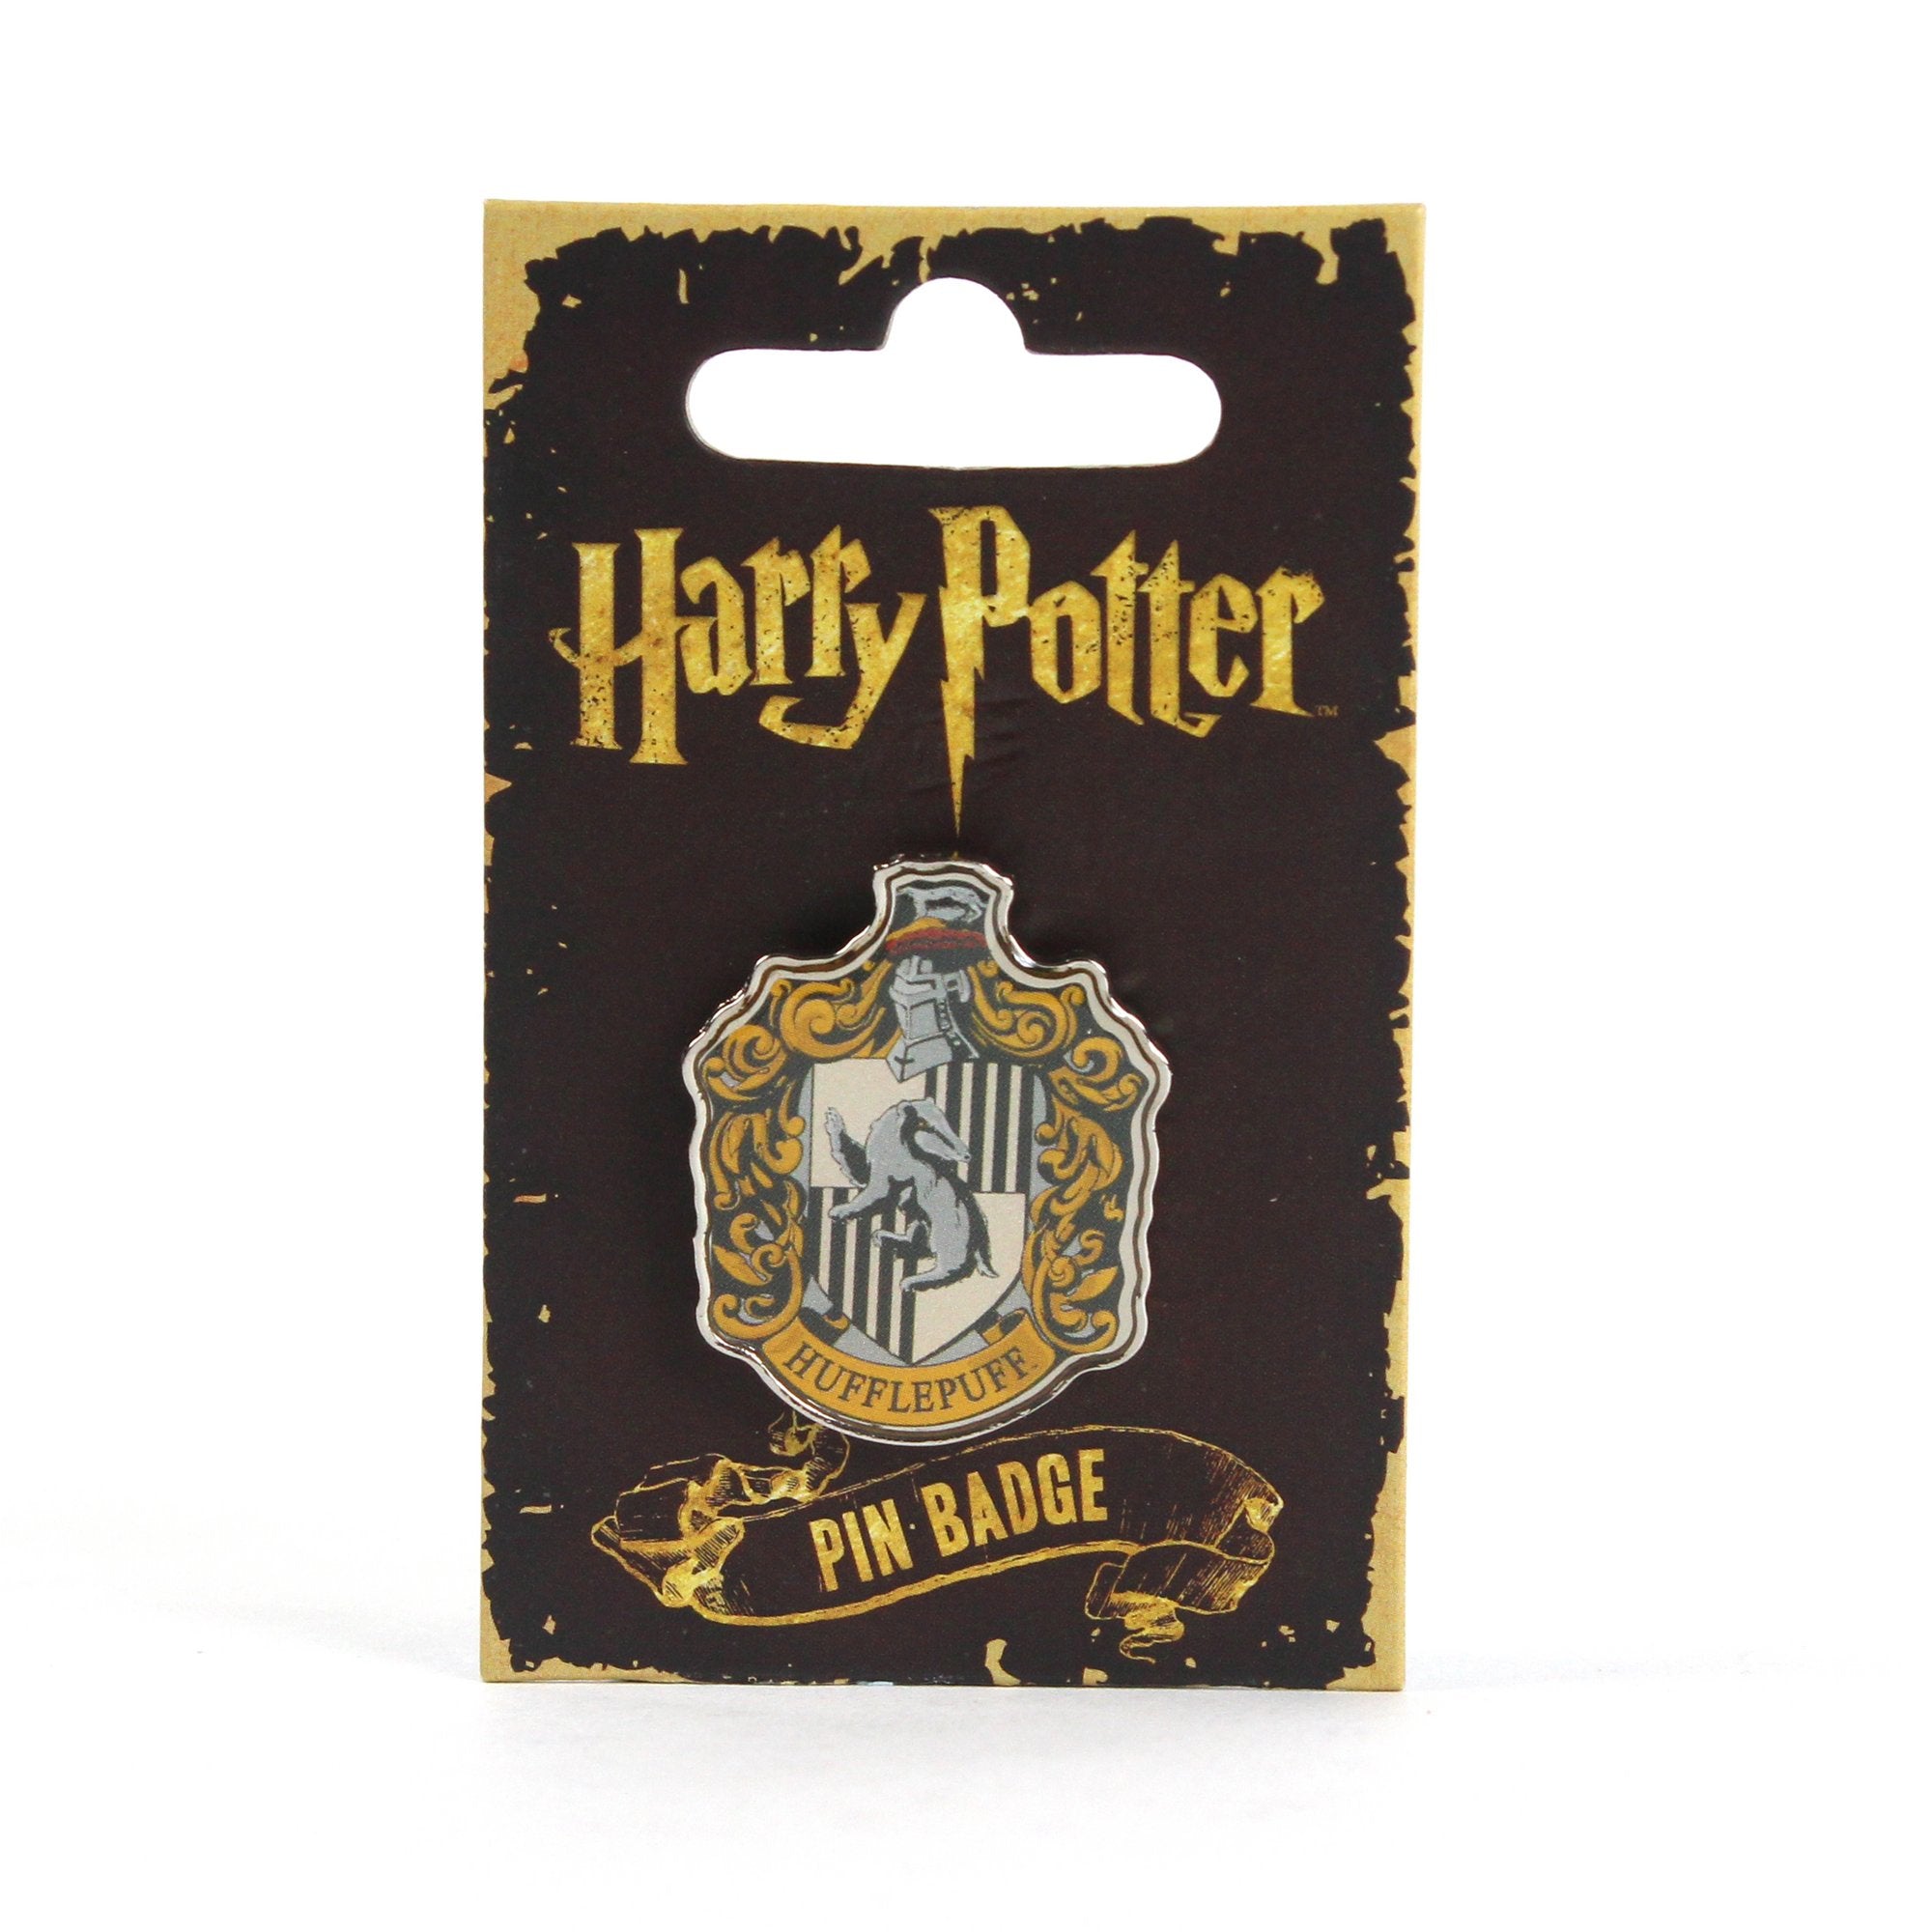 Harry Potter Pin Badge - Hufflepuff